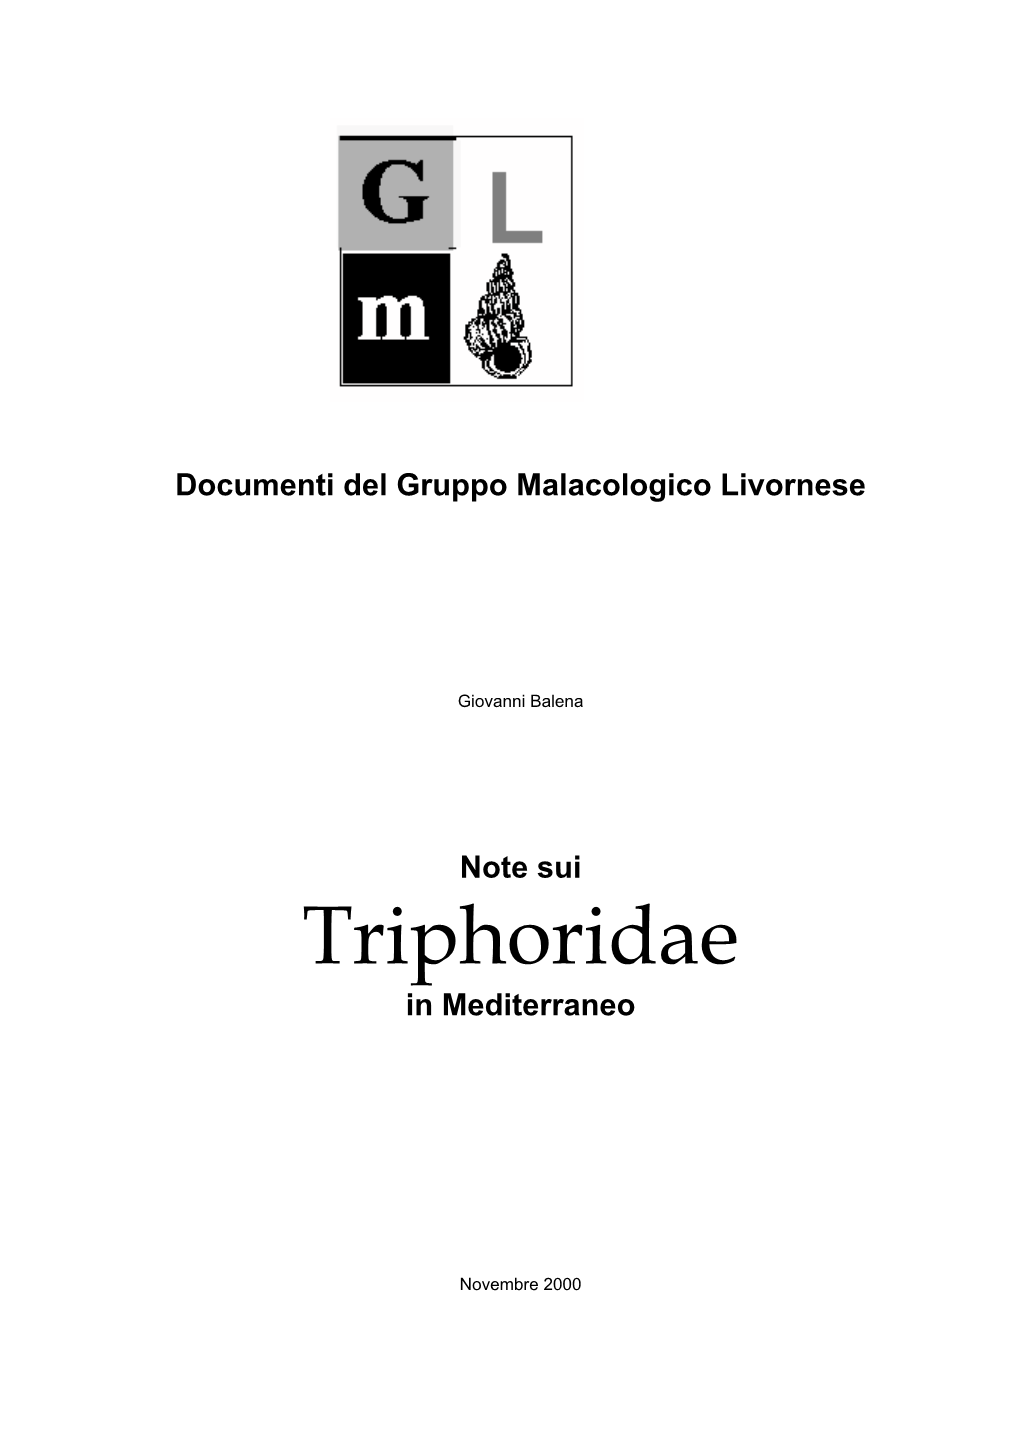 Triphoridae in Mediterraneo